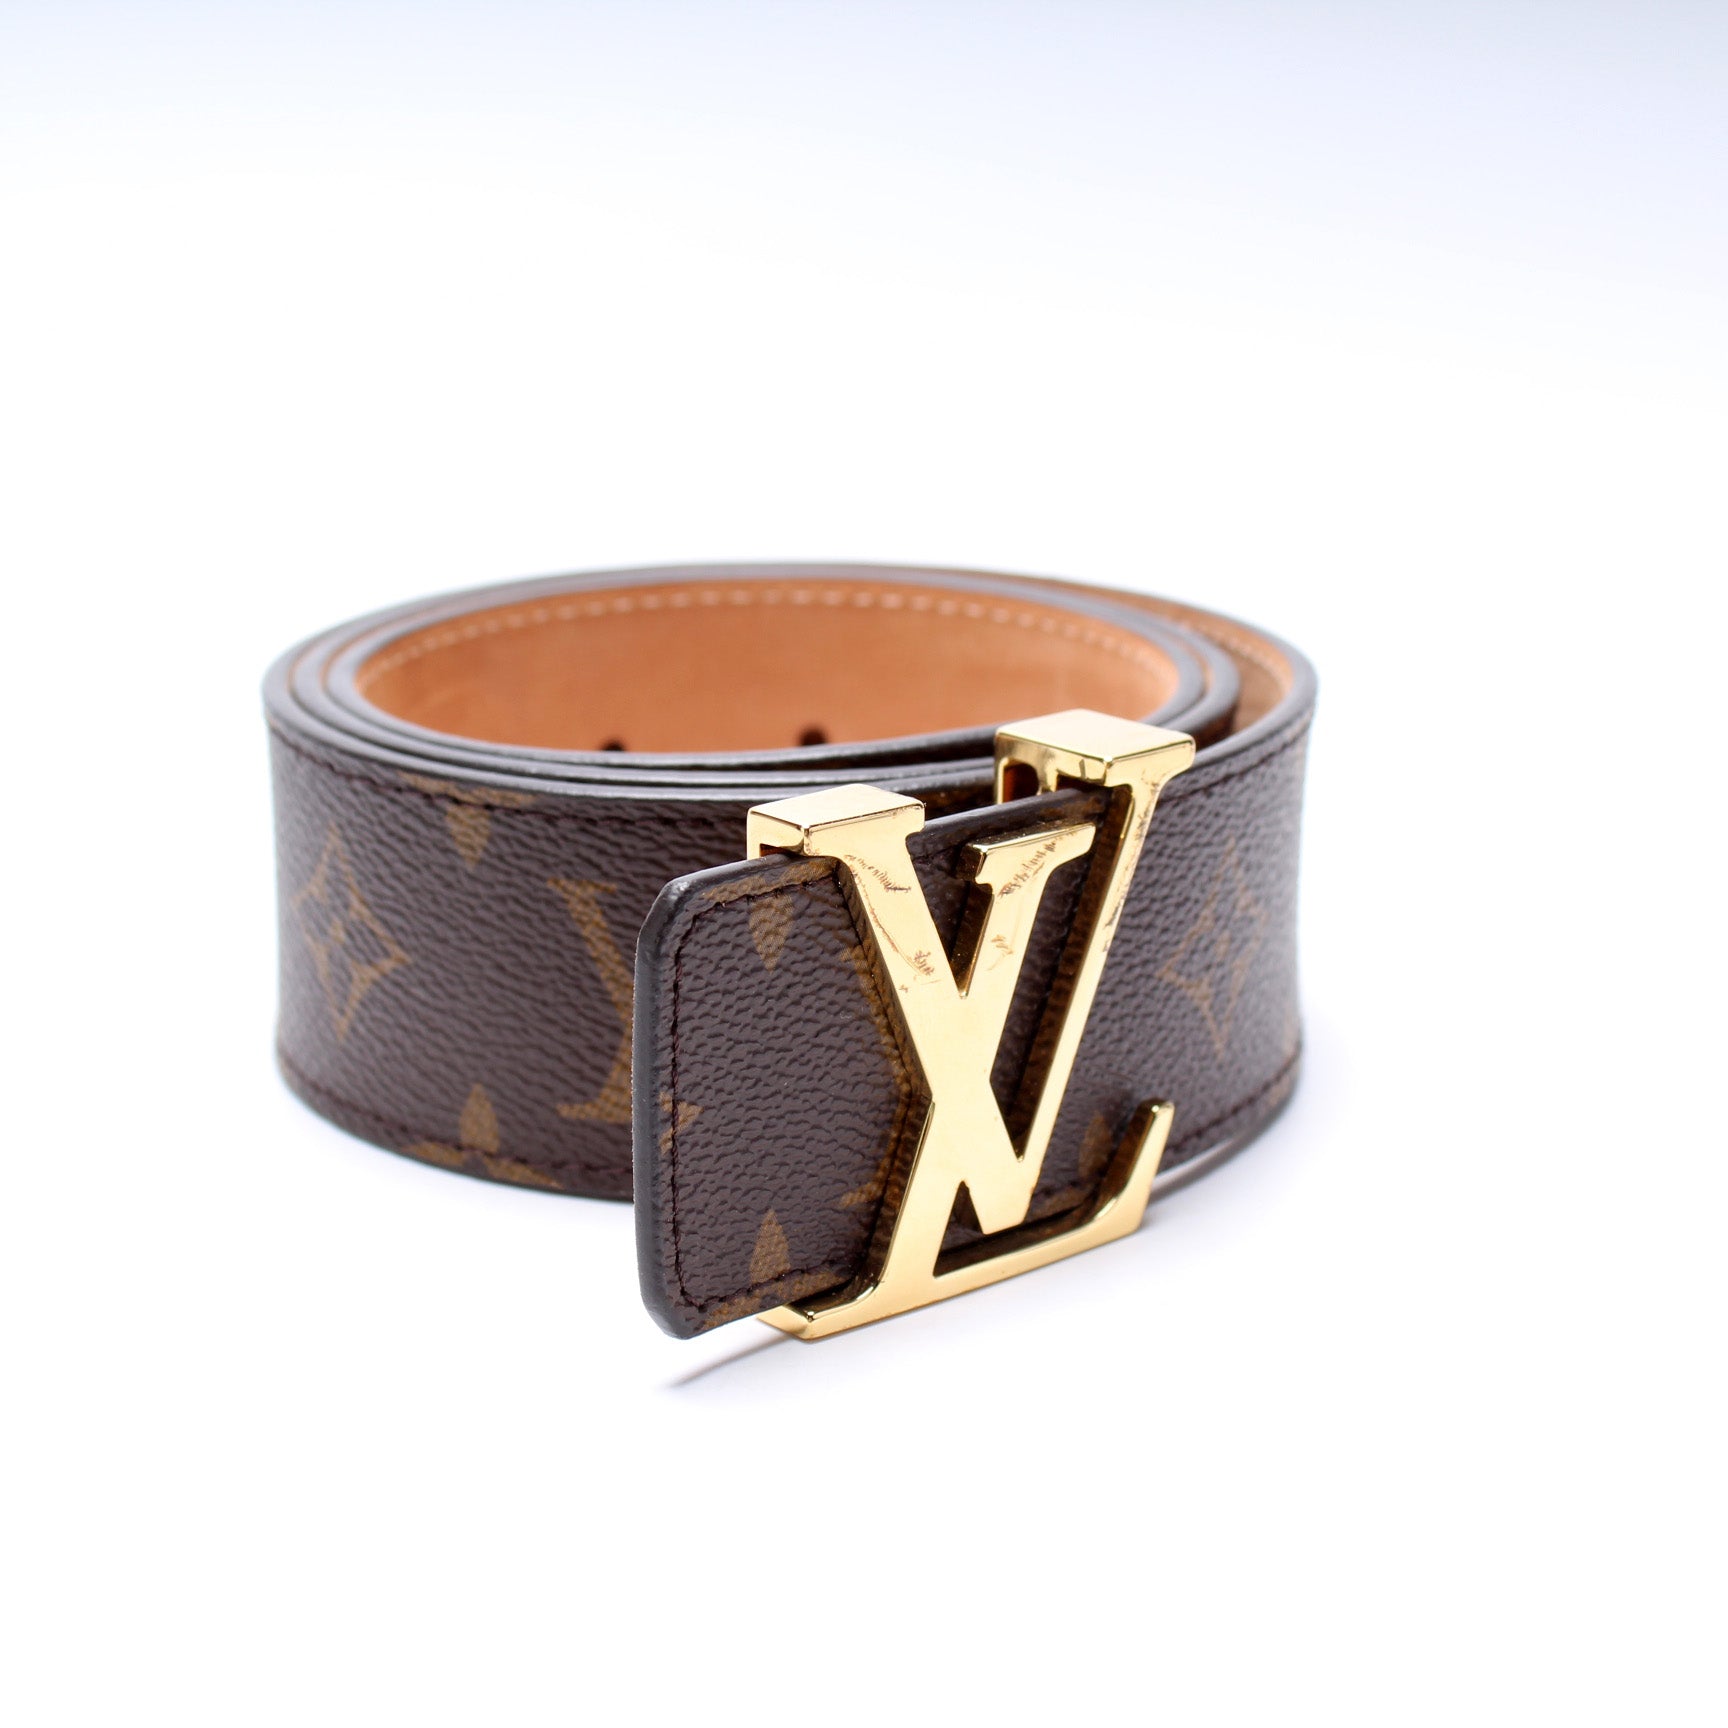 Louis Vuitton Monogram Belt Size 80/32